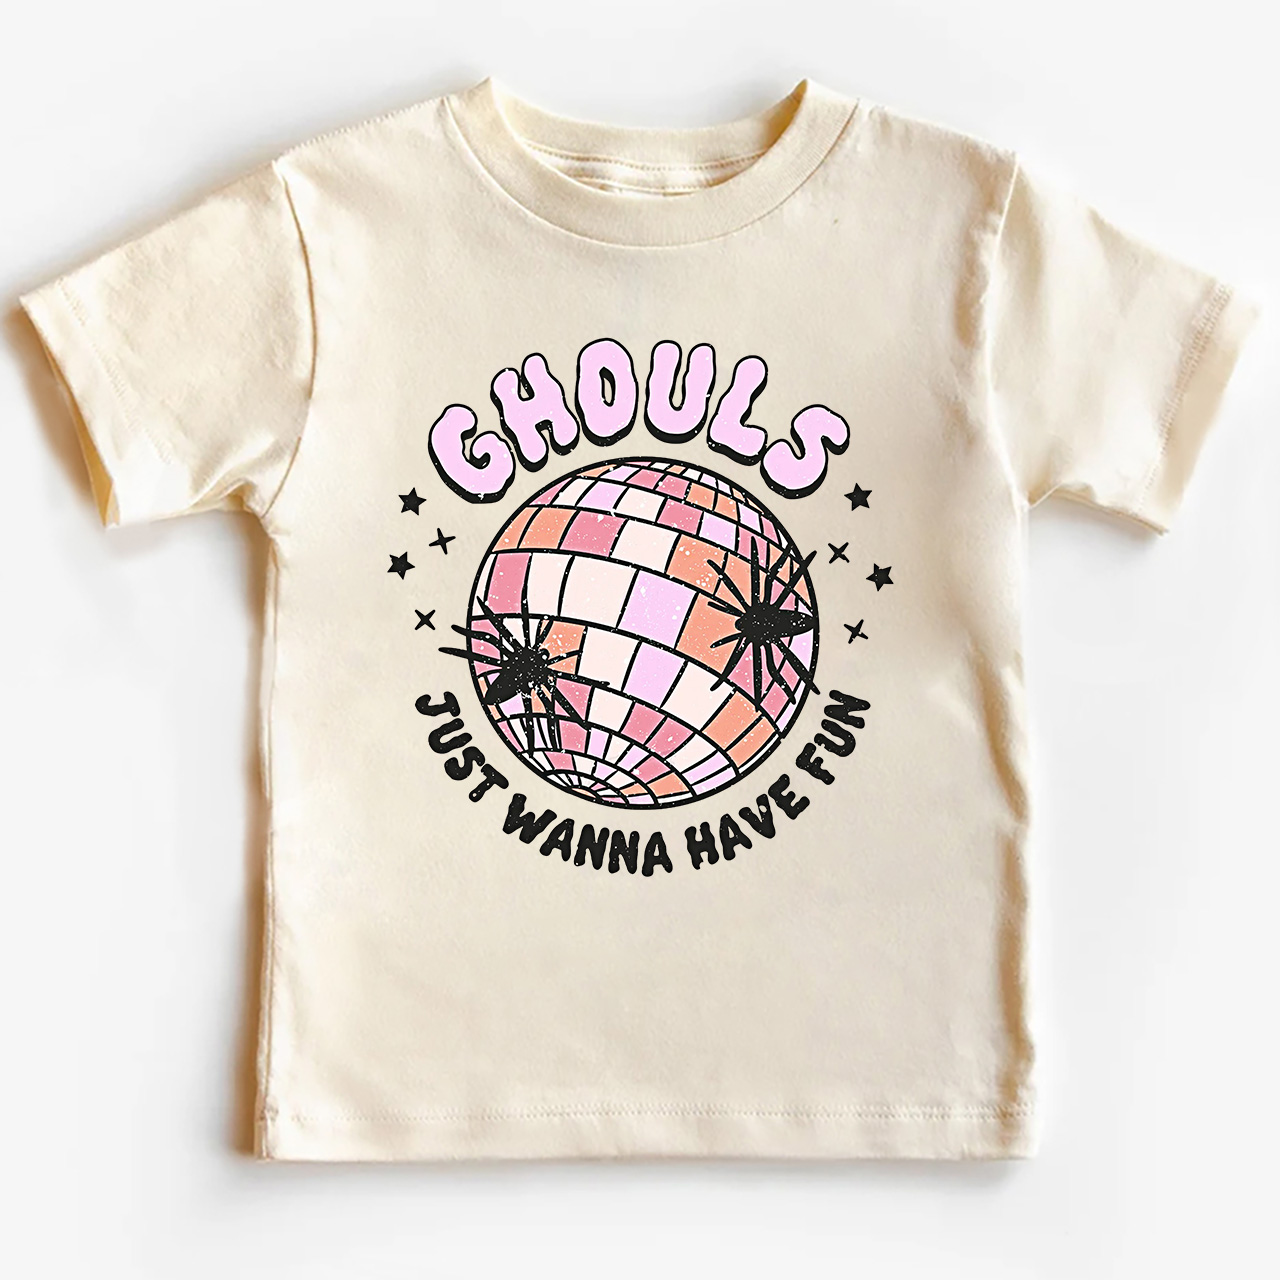 Ghouls Just Wanna Have Fun Kids Halloween T-shirt